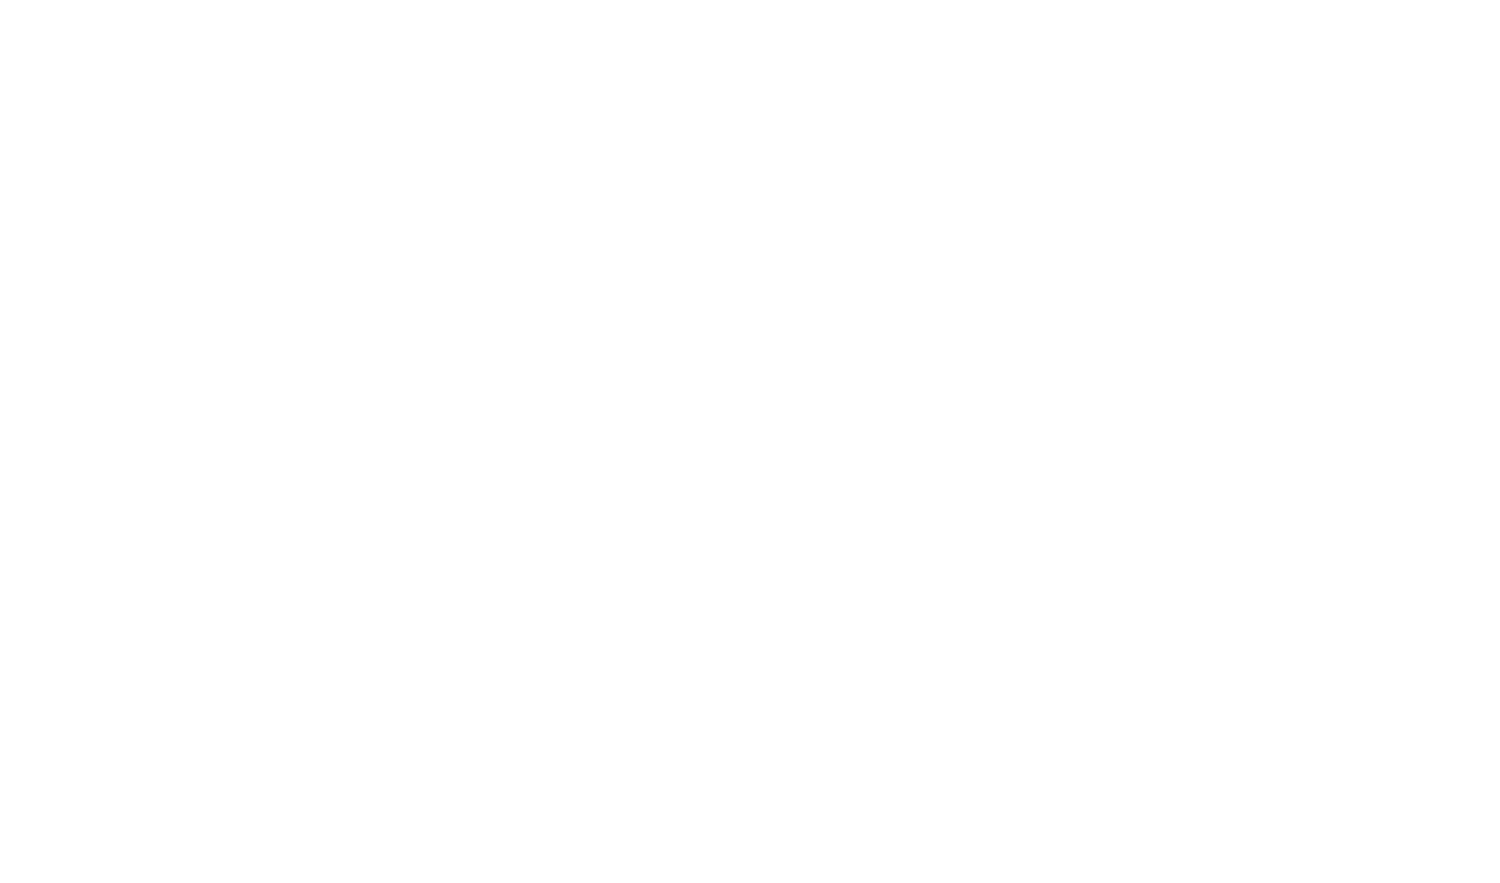 SureFact Aerial